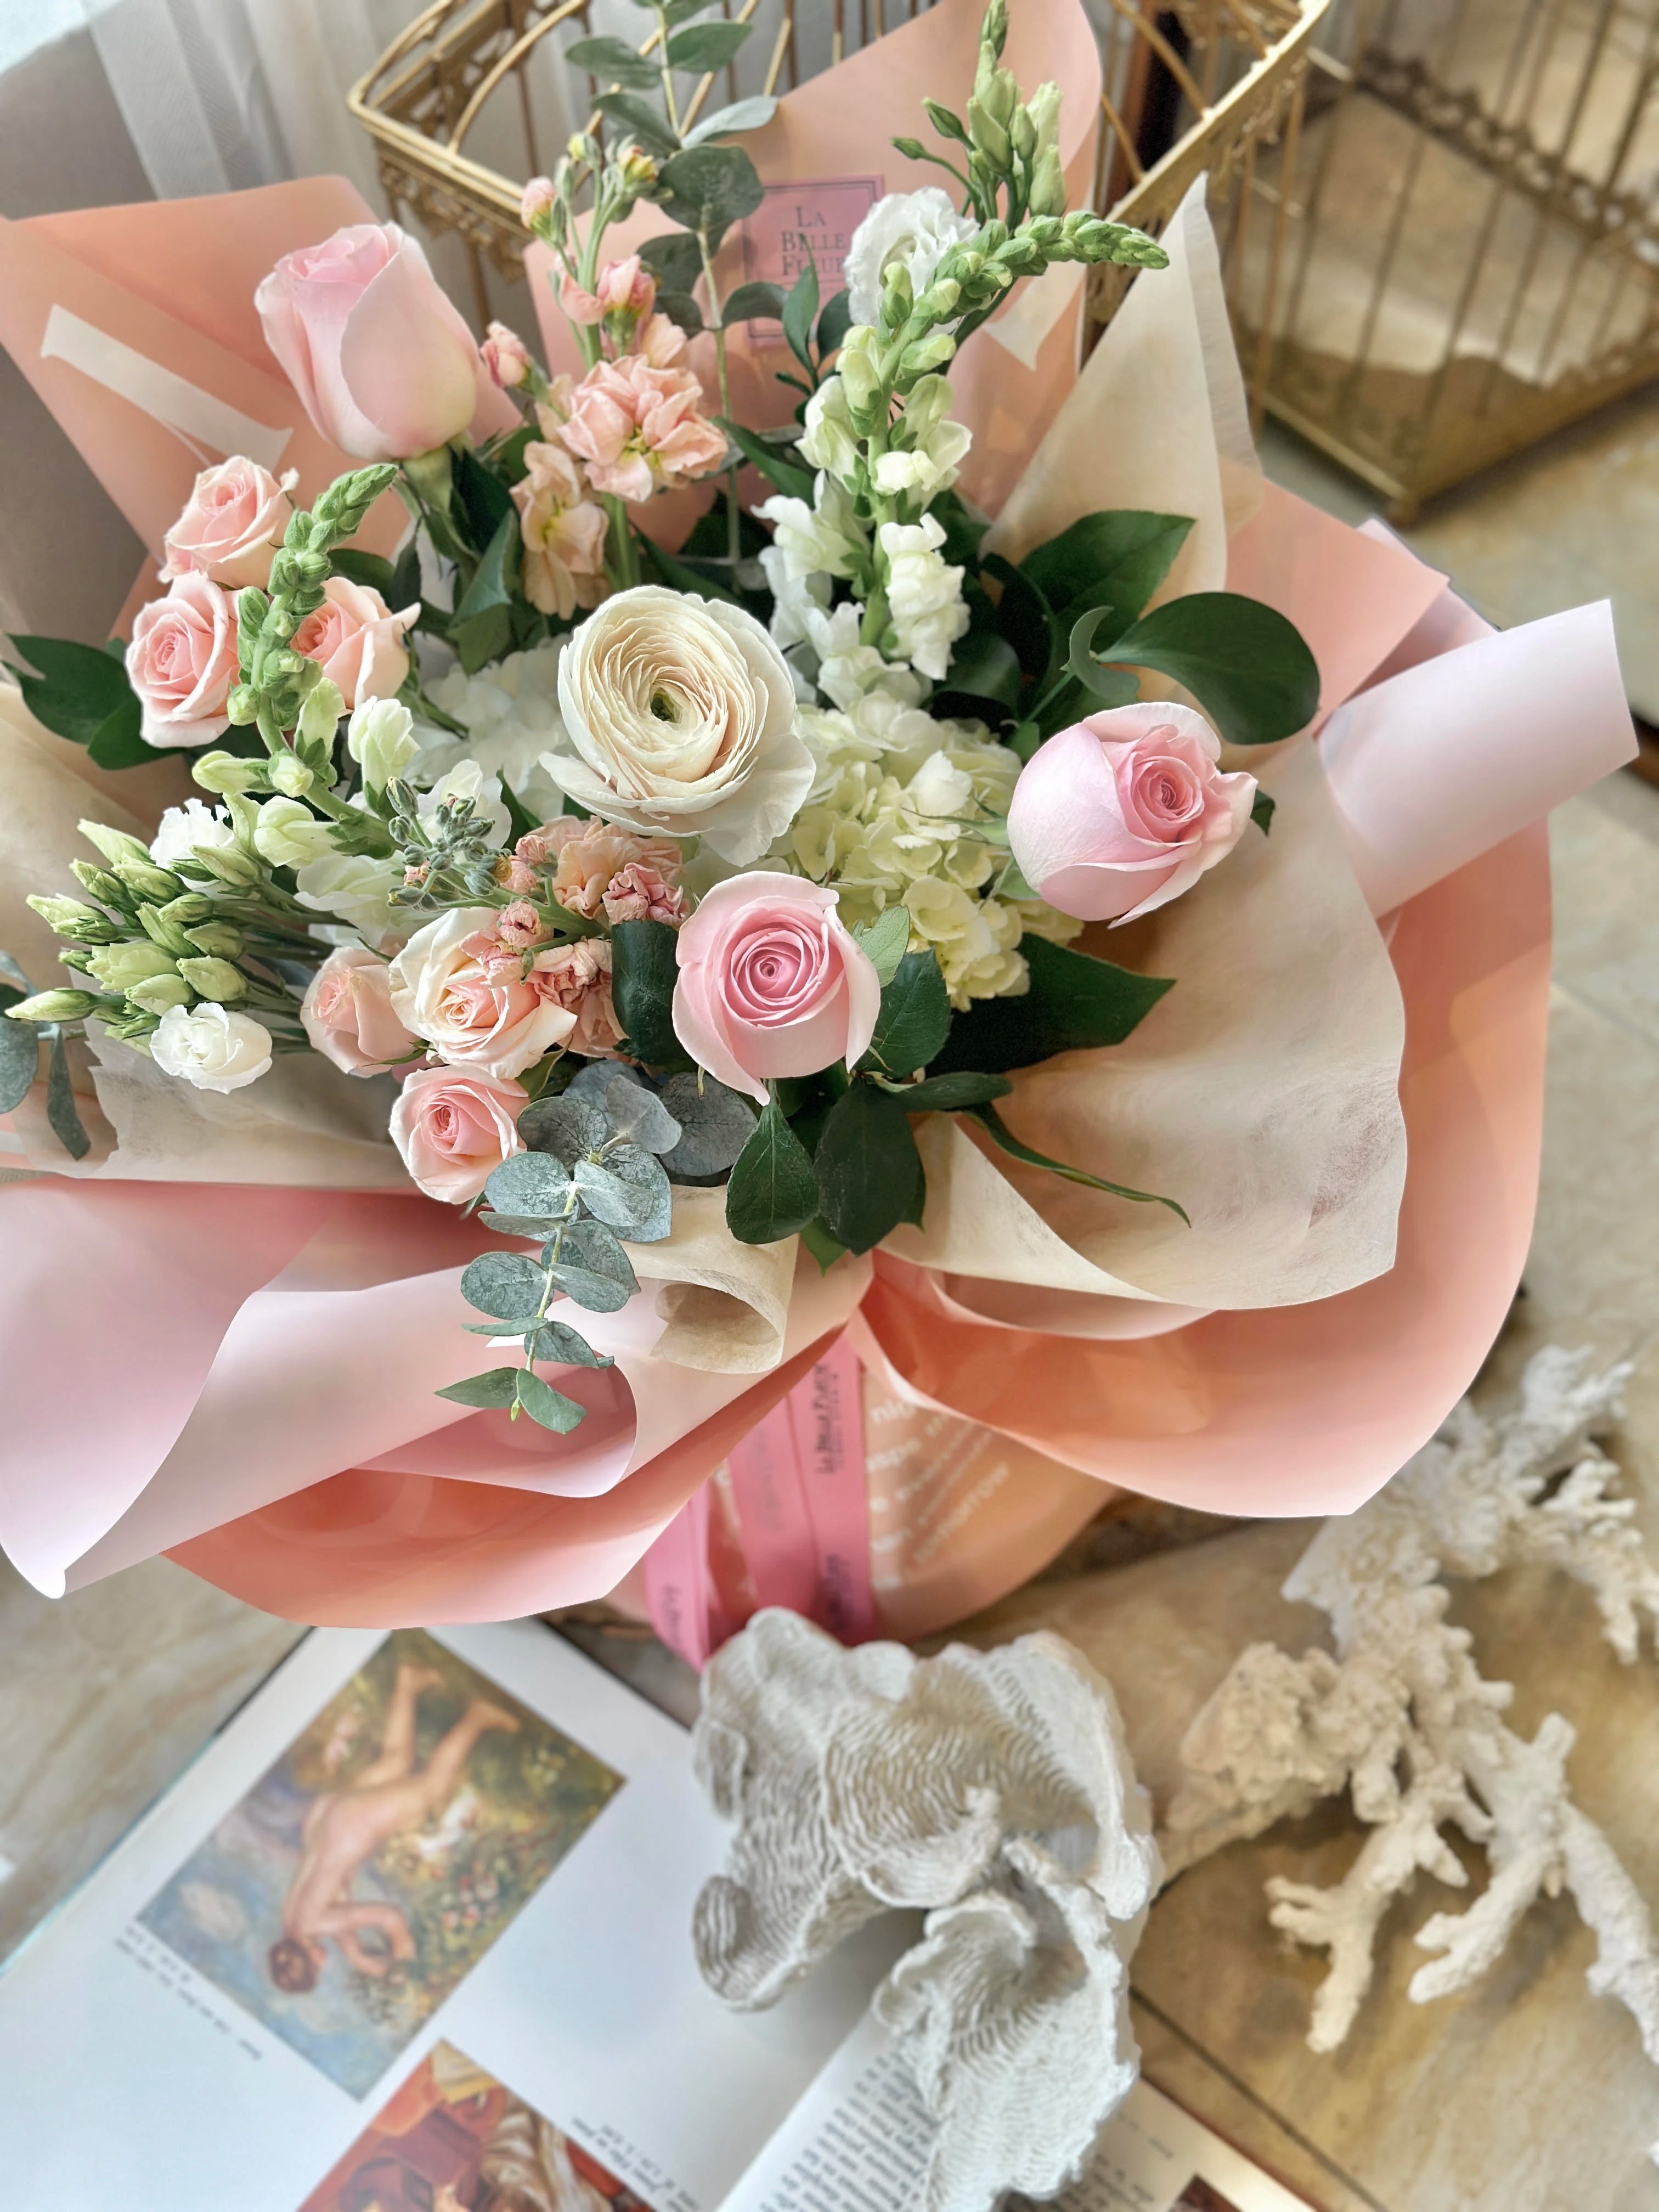 Pink Colored Flowers & Arrangements, La Belle Fleur, Toronto Florist, Vaughan Flower Same-Day Delivery